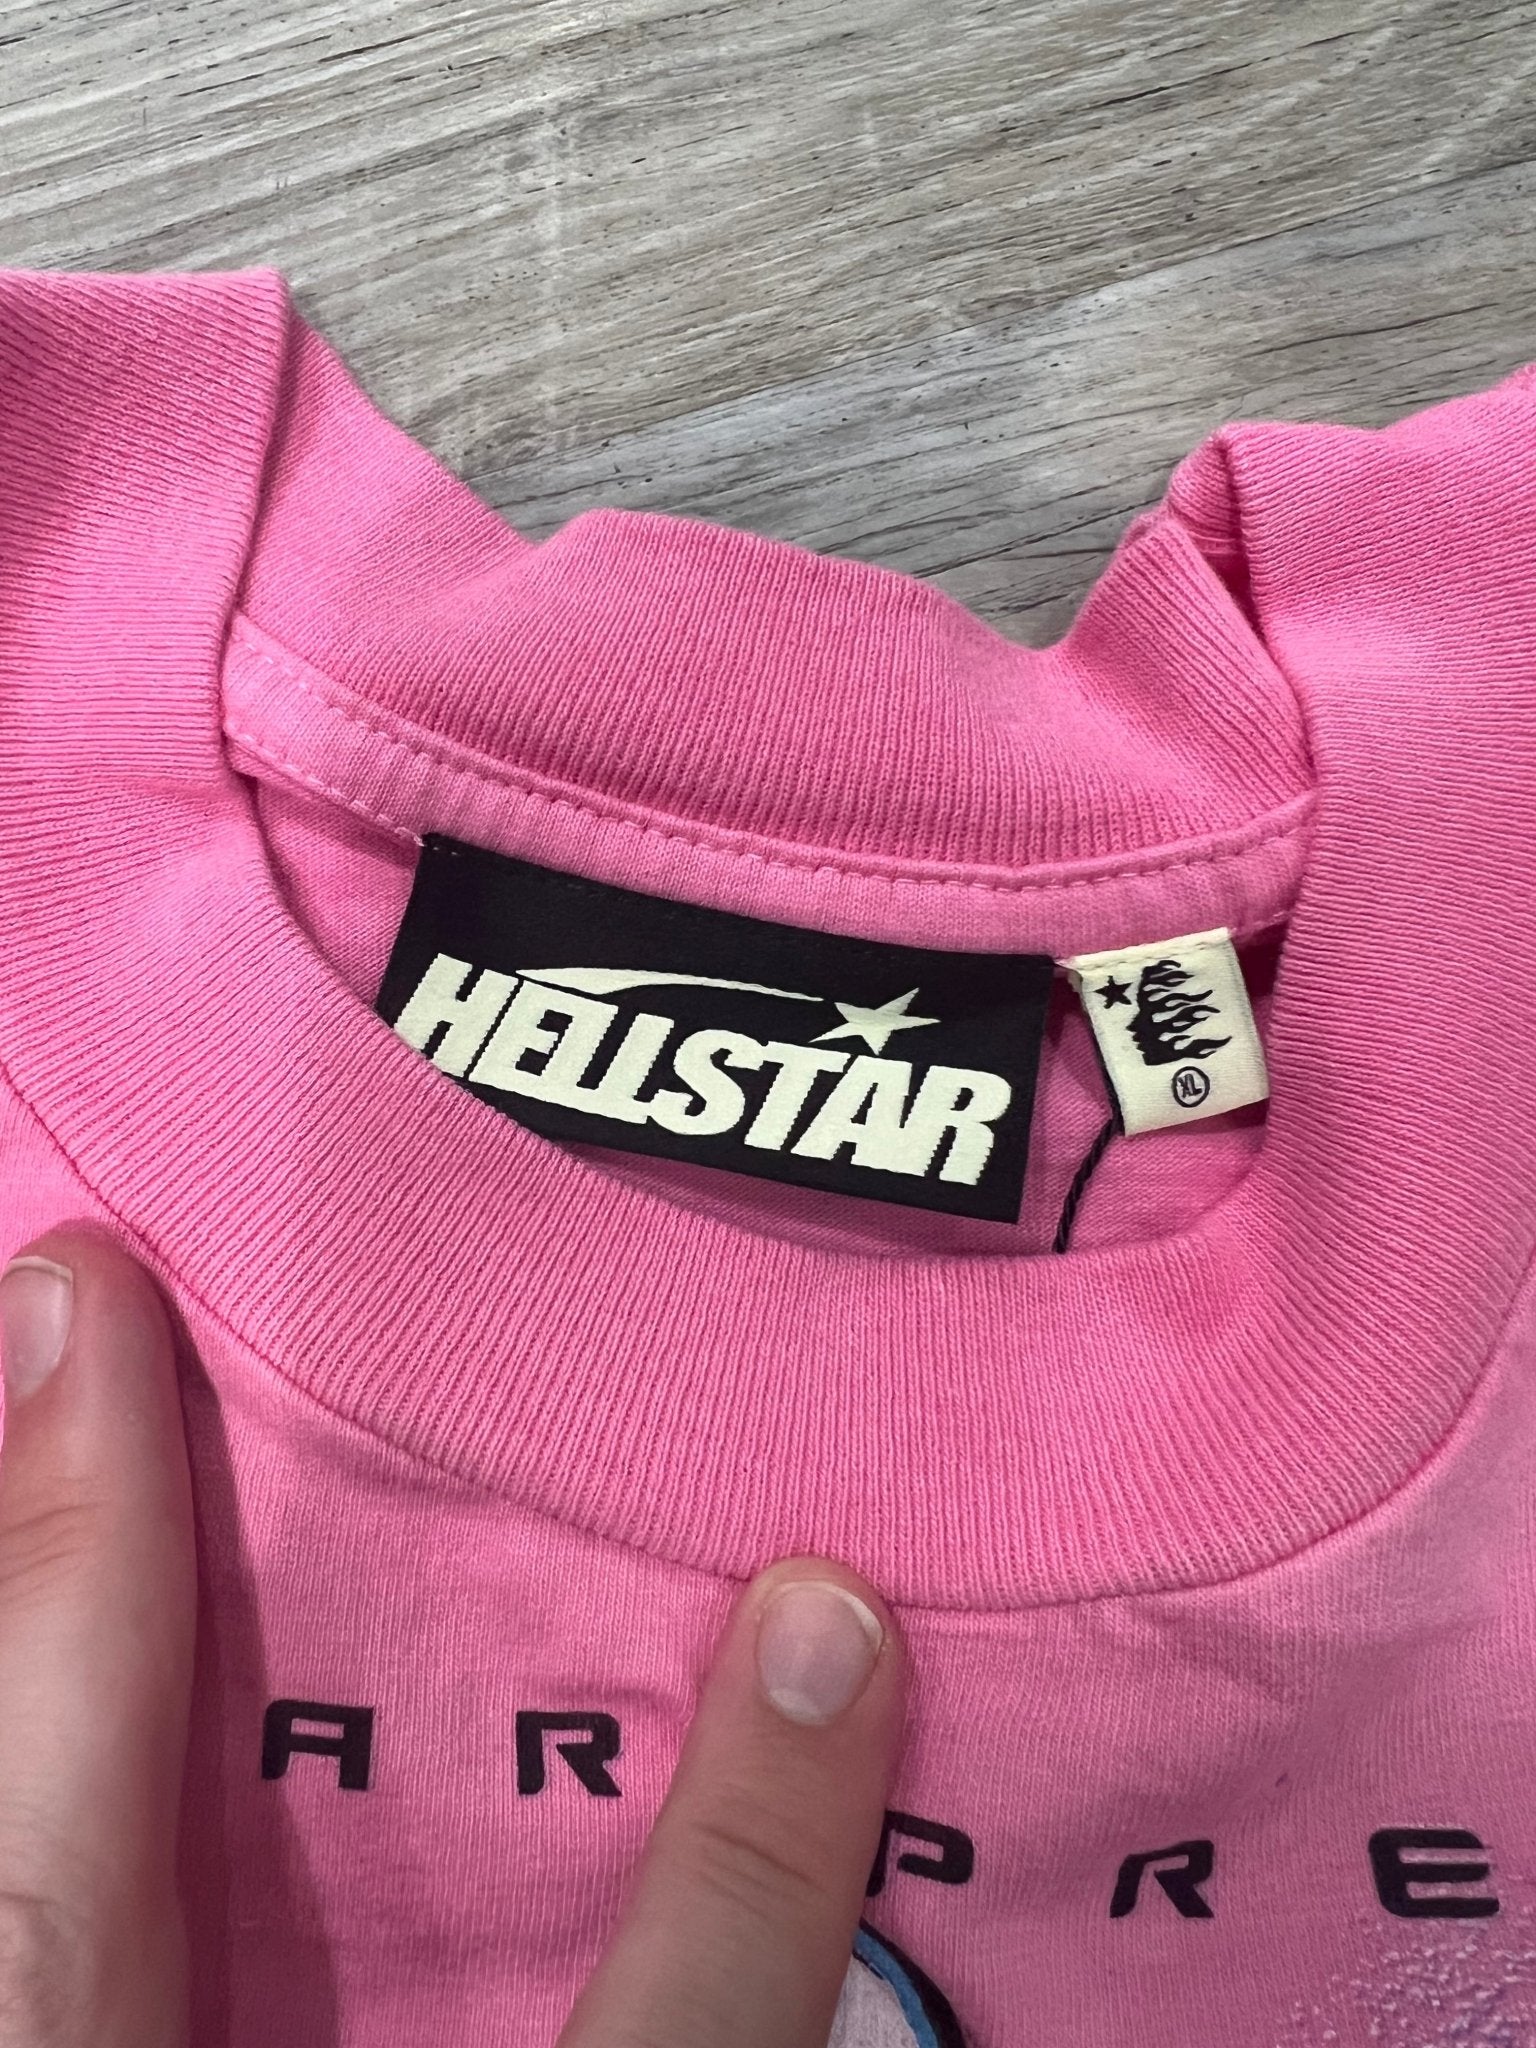 Hellstar Brainwashed World Tour T-Shirt - Supra Sneakers